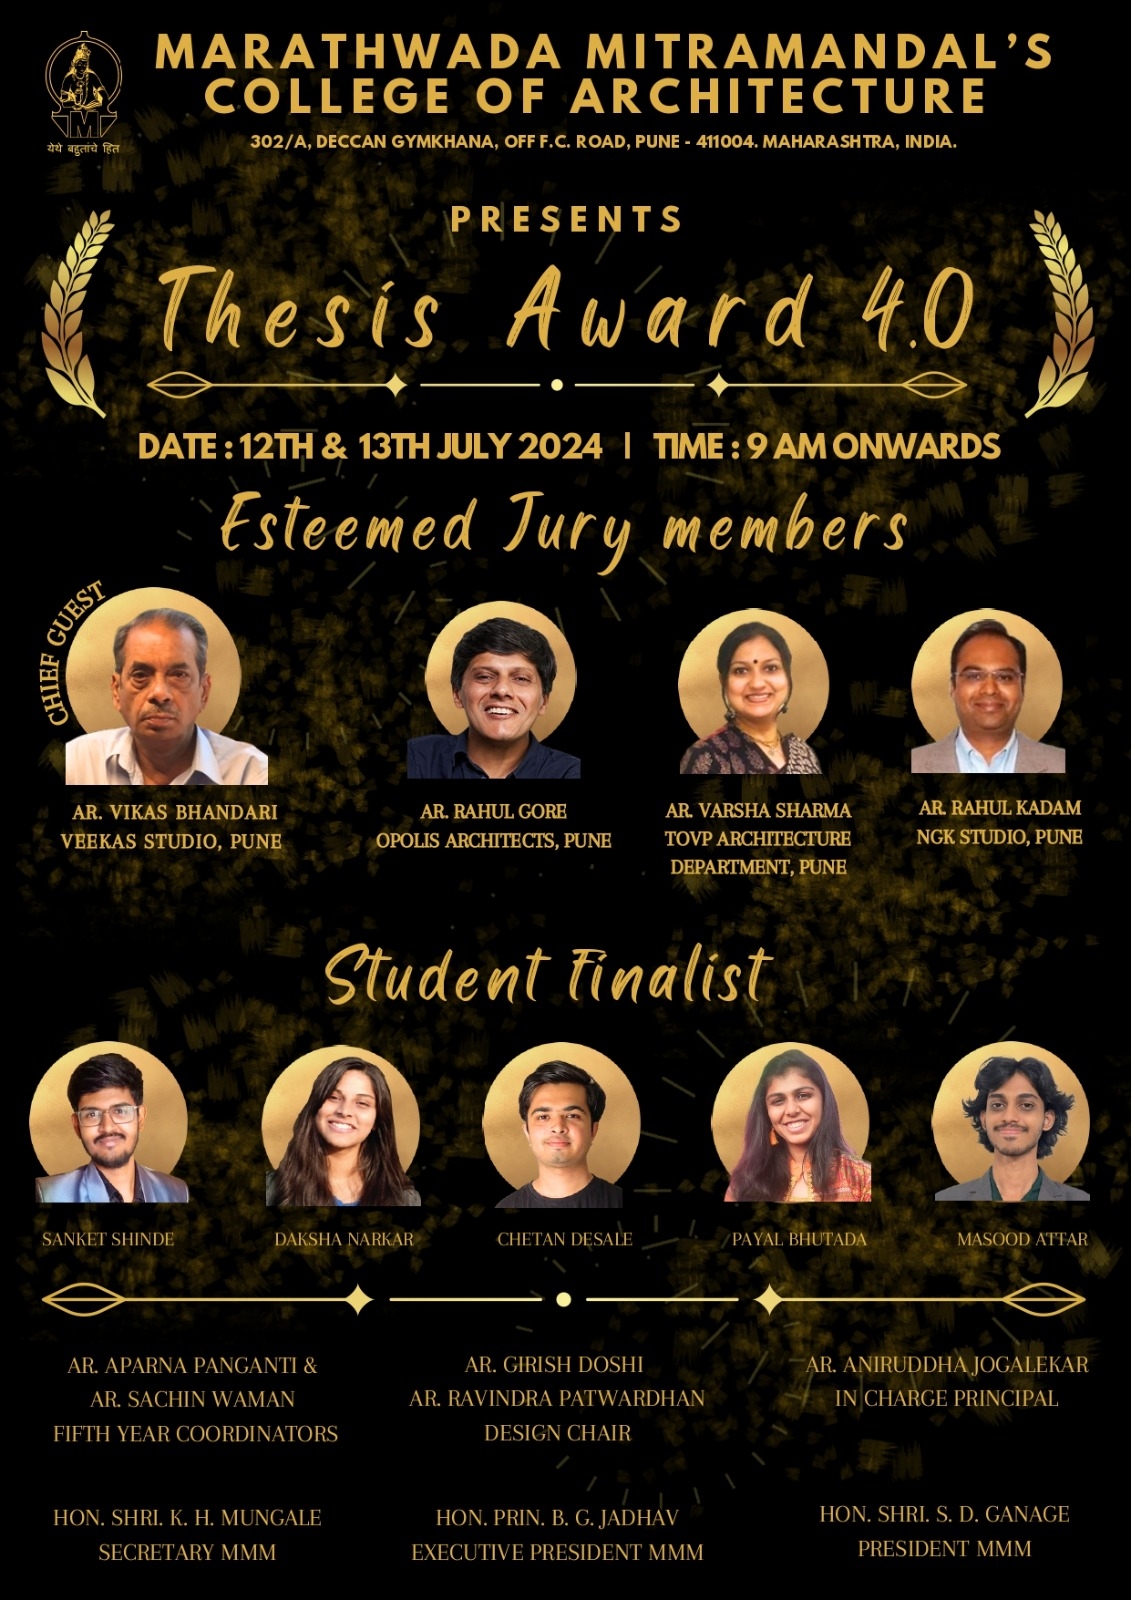 Thesis Award 4.0